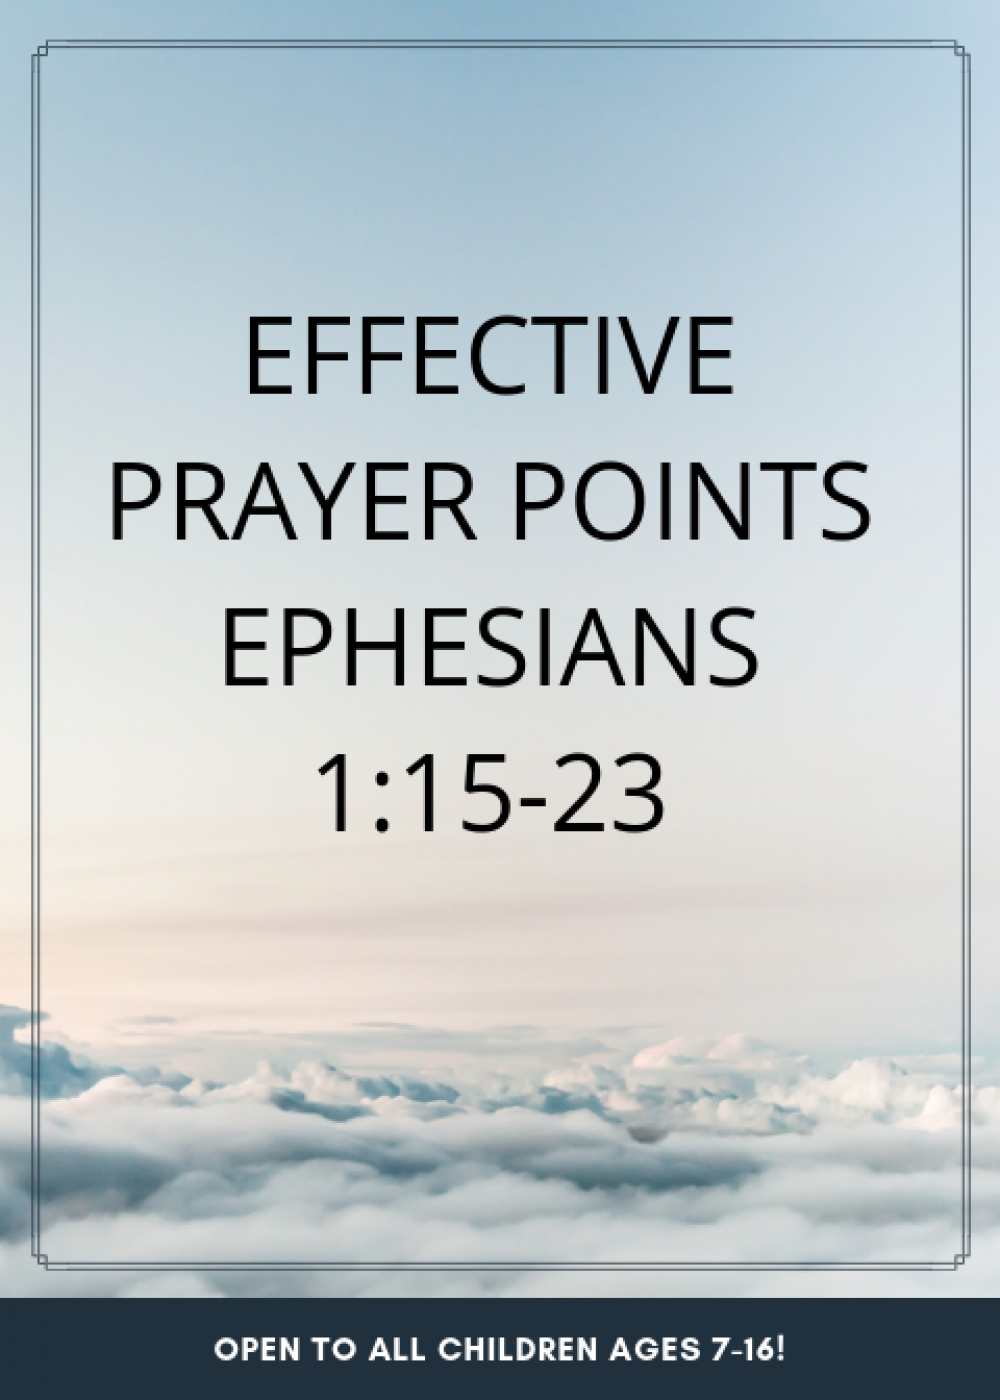 30 Effective Prayer Points | PRAYER POINTS